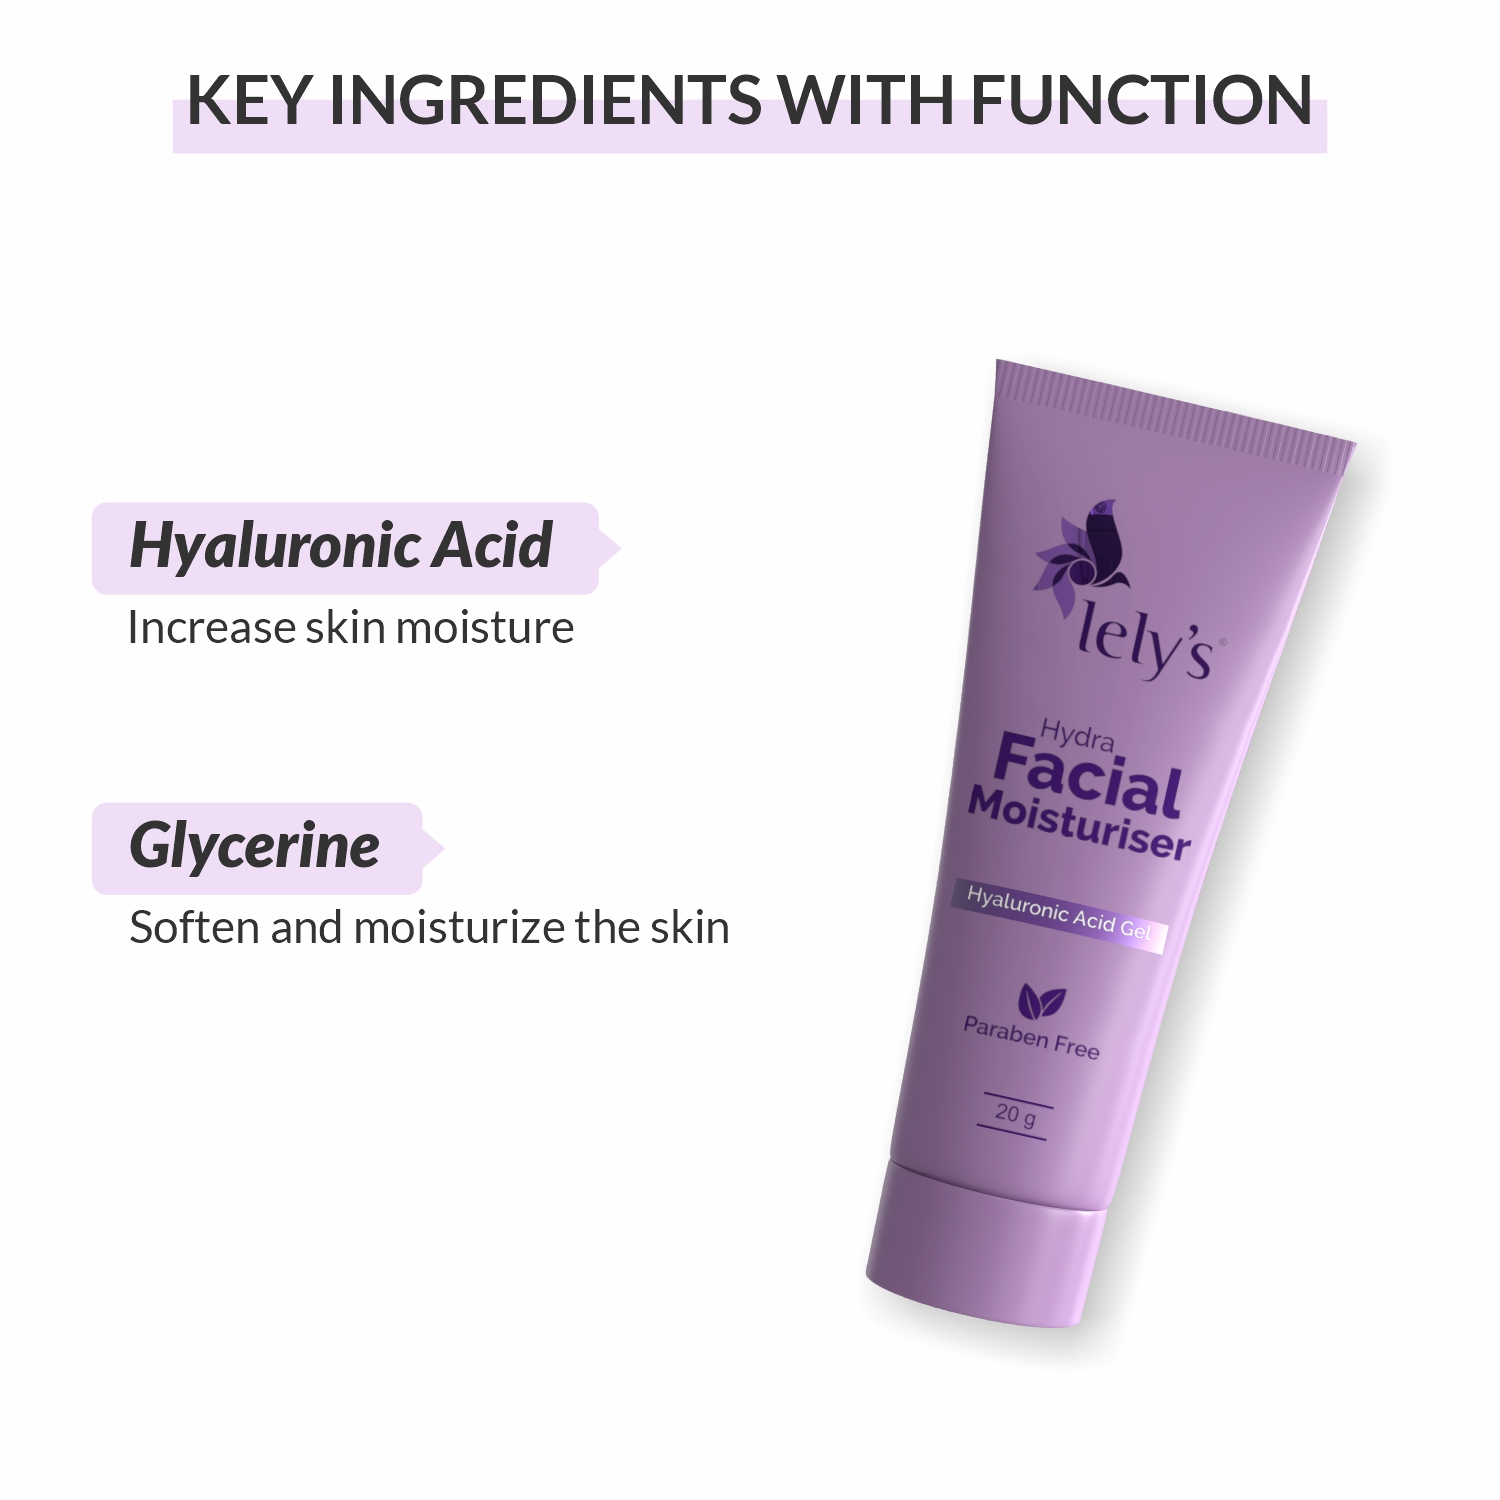 Hydra Facial Moisturiser key ingredients